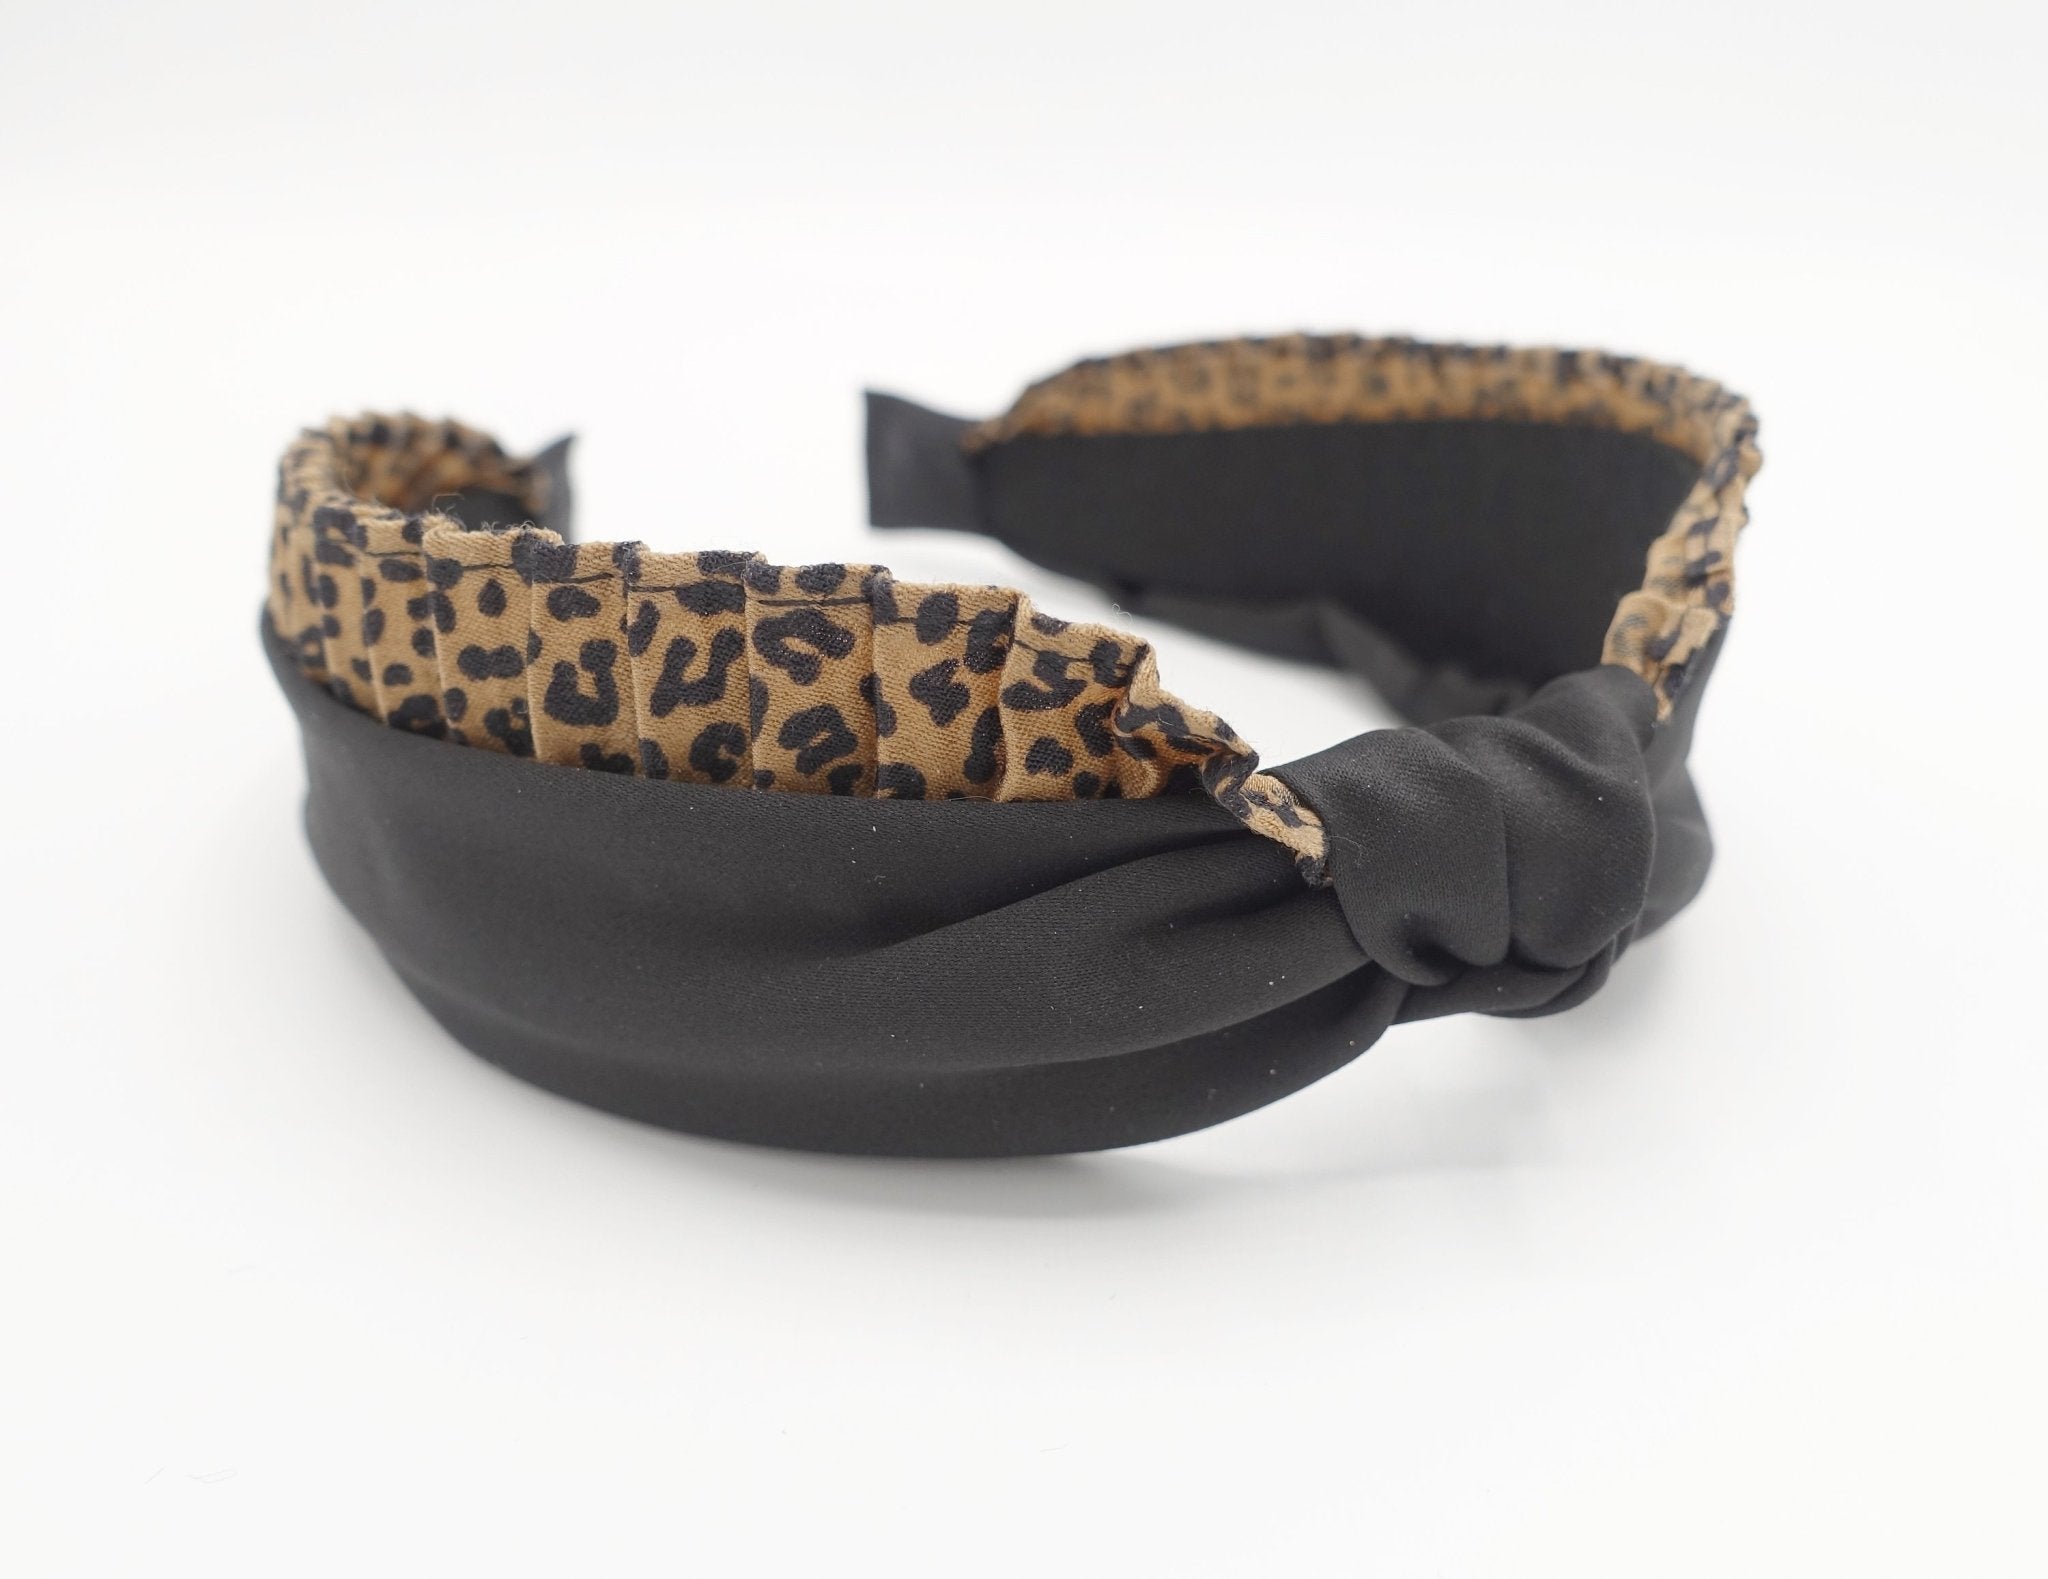 VeryShine Headband leopard frill trim decorated satin knot headband for women